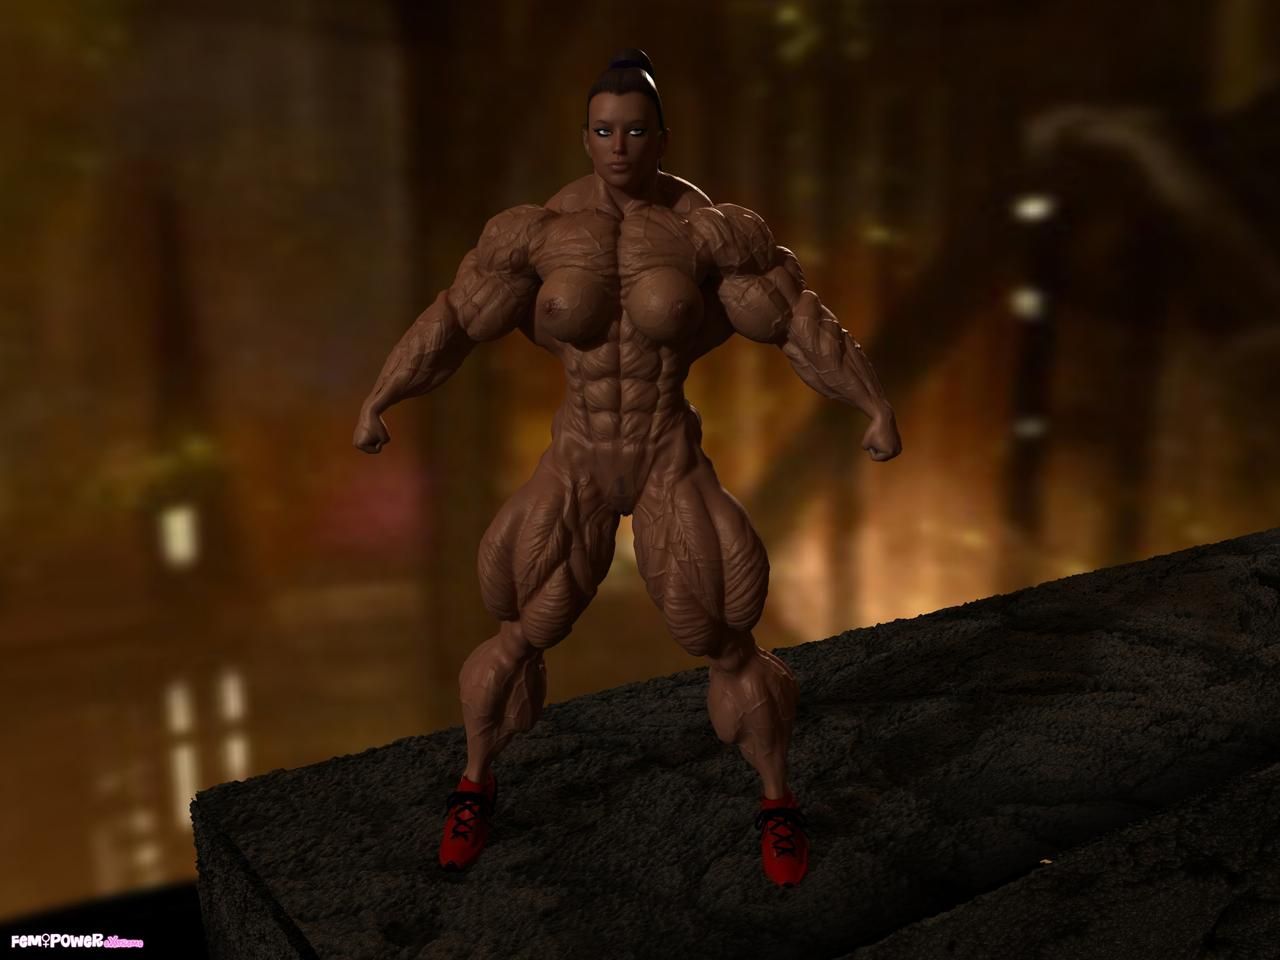 Muscle girls 3D models_ part 2 by Tigersan 64